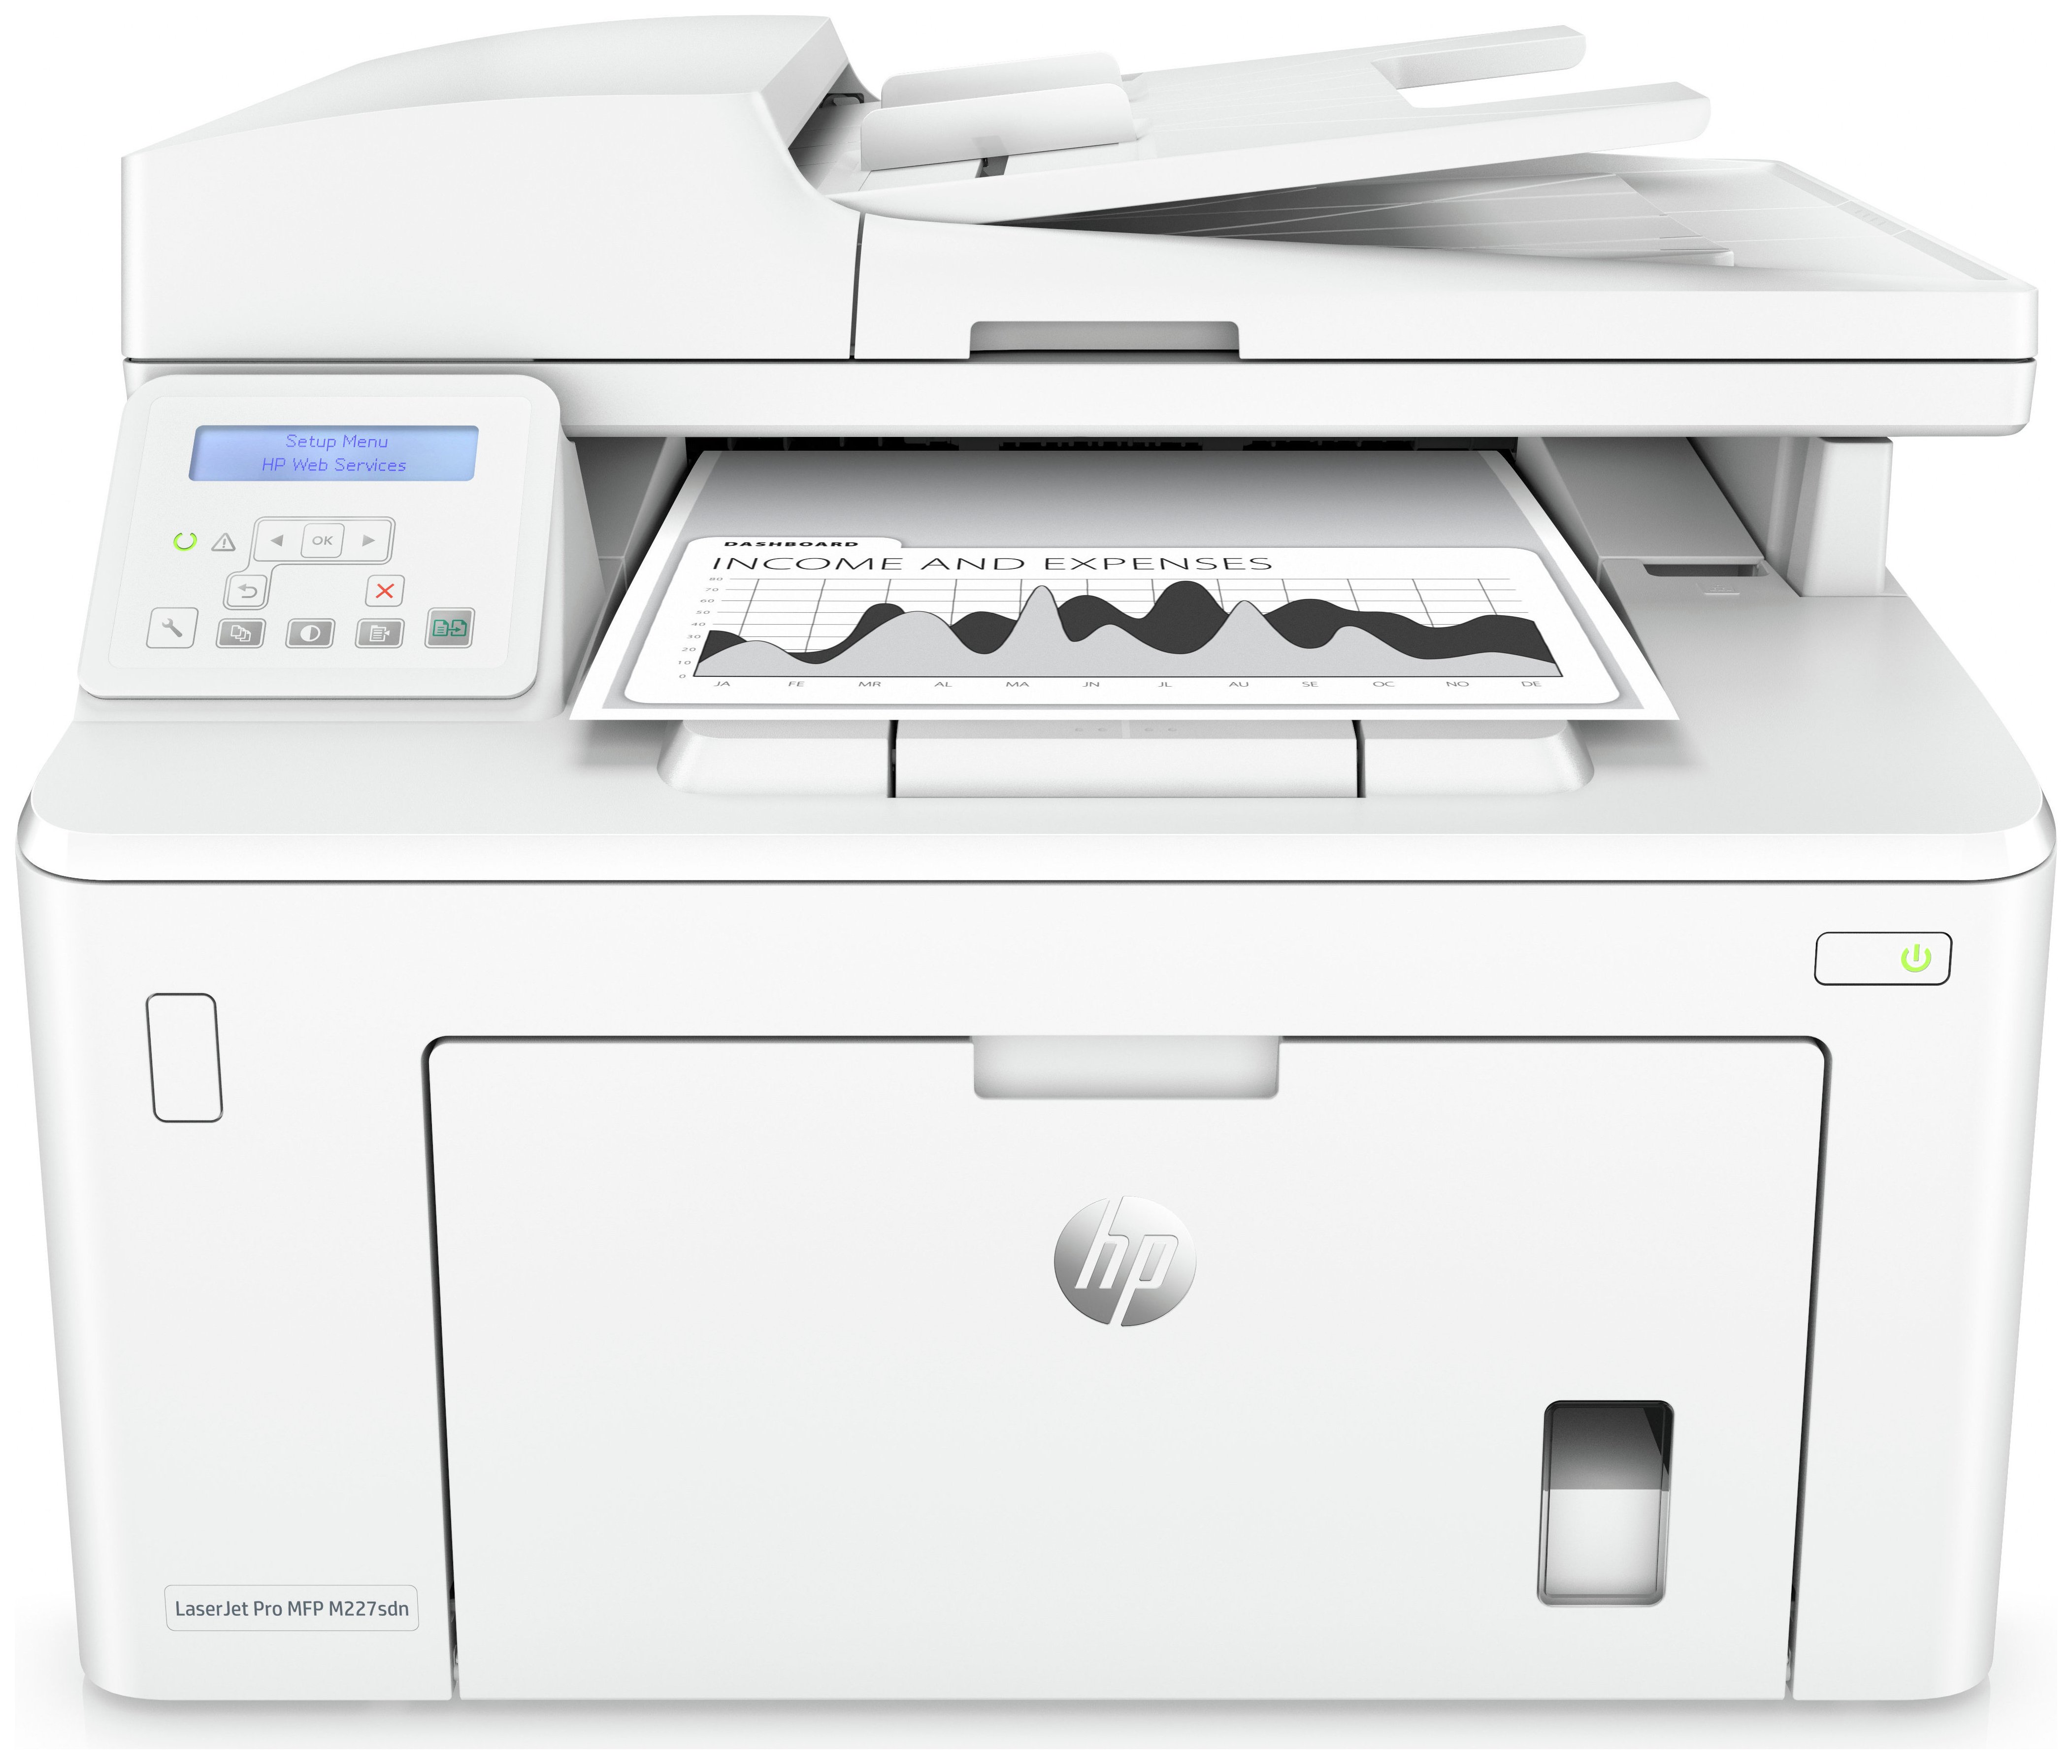 HP LaserJet Pro MFP M227SDN Laser Printer. Review